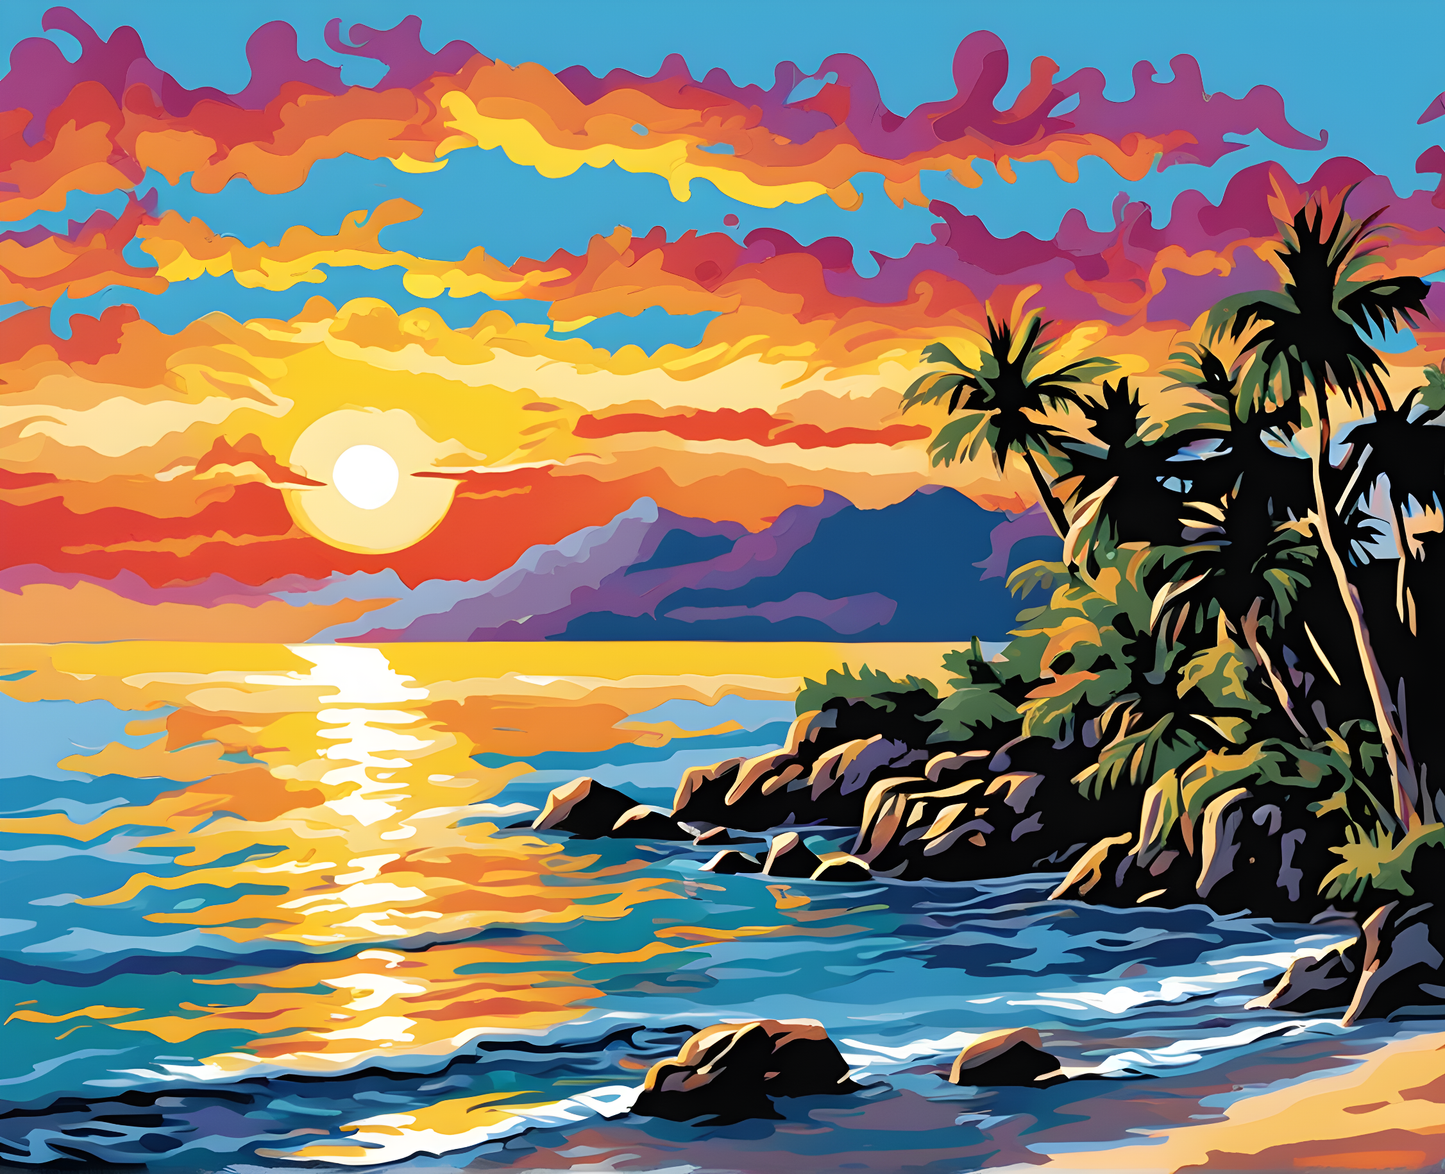 Sunrise on Island Shore (2) - Van-Go Paint-By-Number Kit